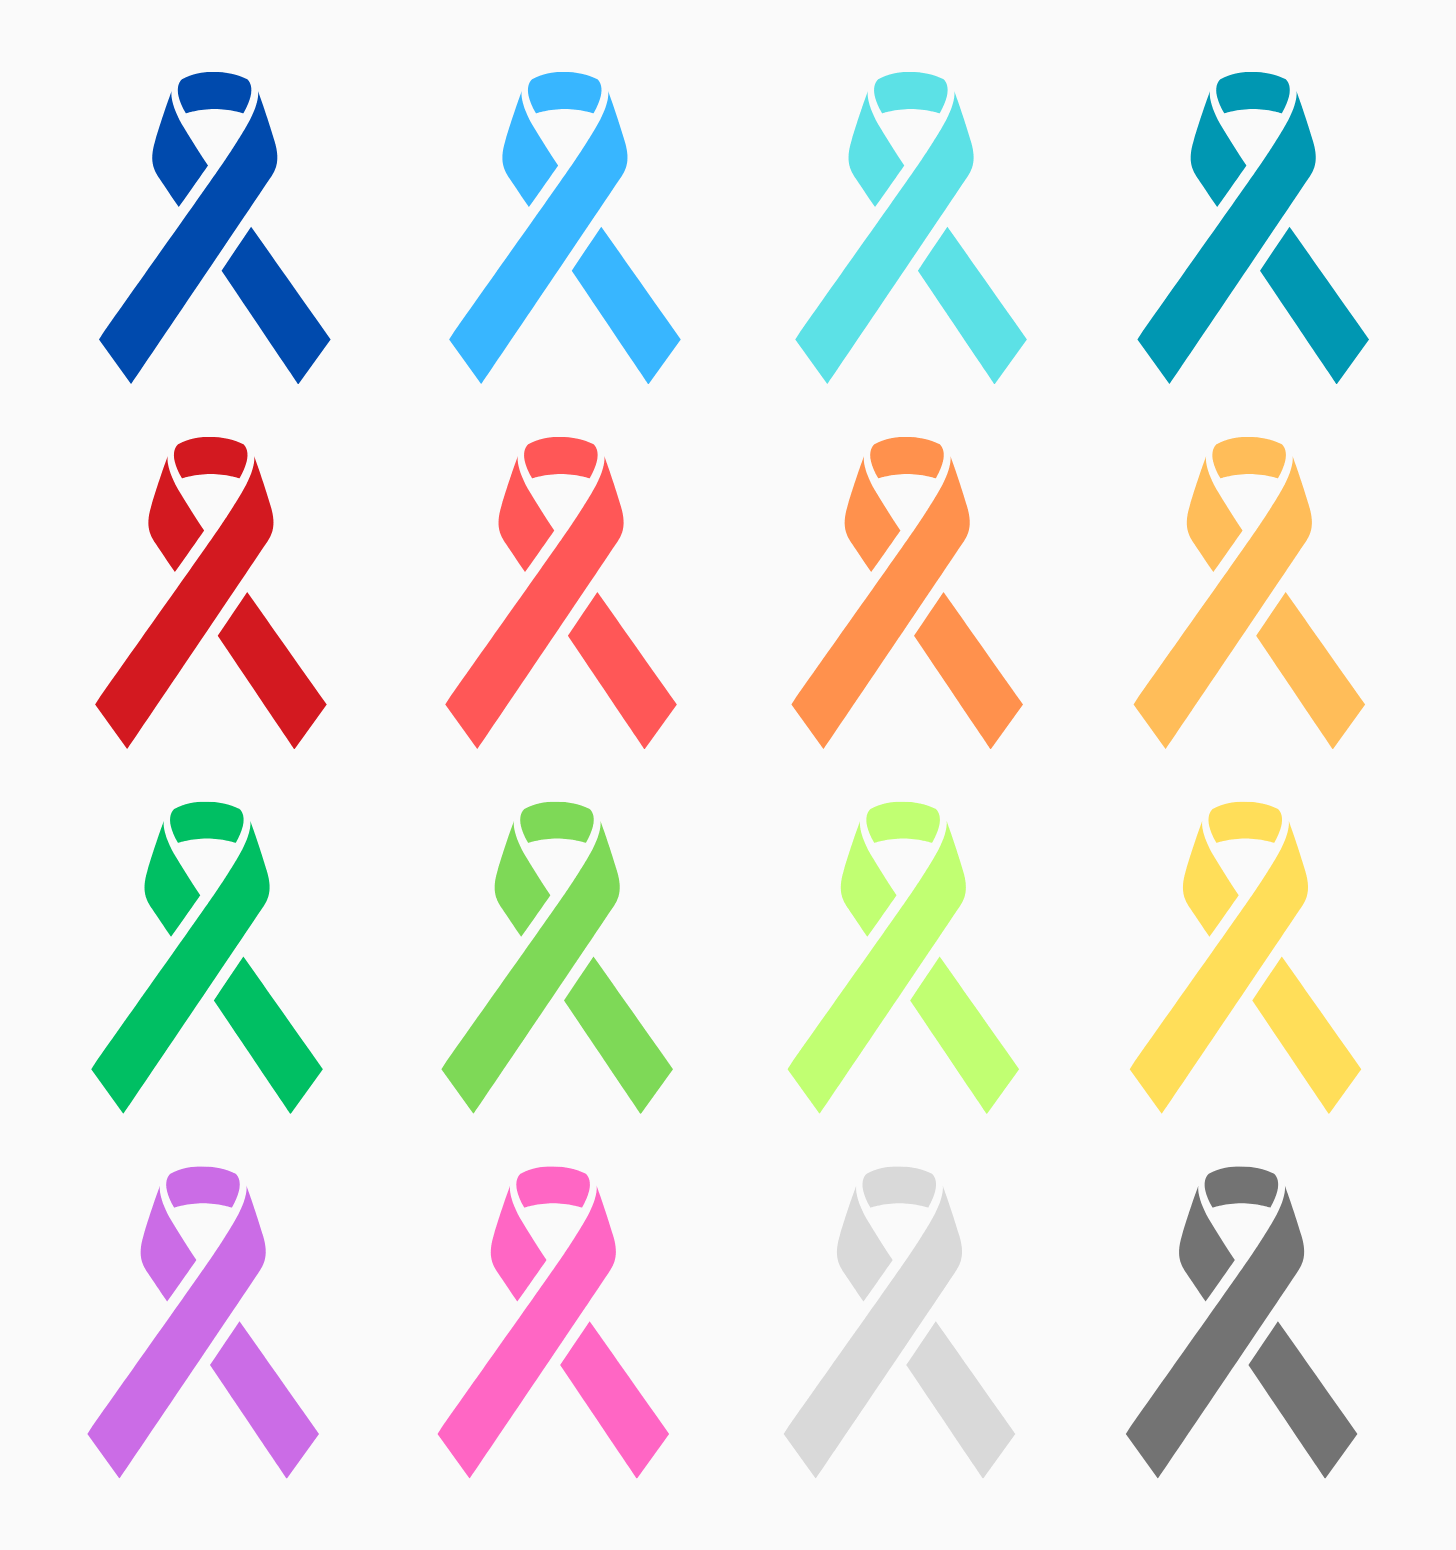 Blue, light blue, red, light red, orange, yellow, green, light green, yellow, purple, pink, gray, black, white awareness ribbons